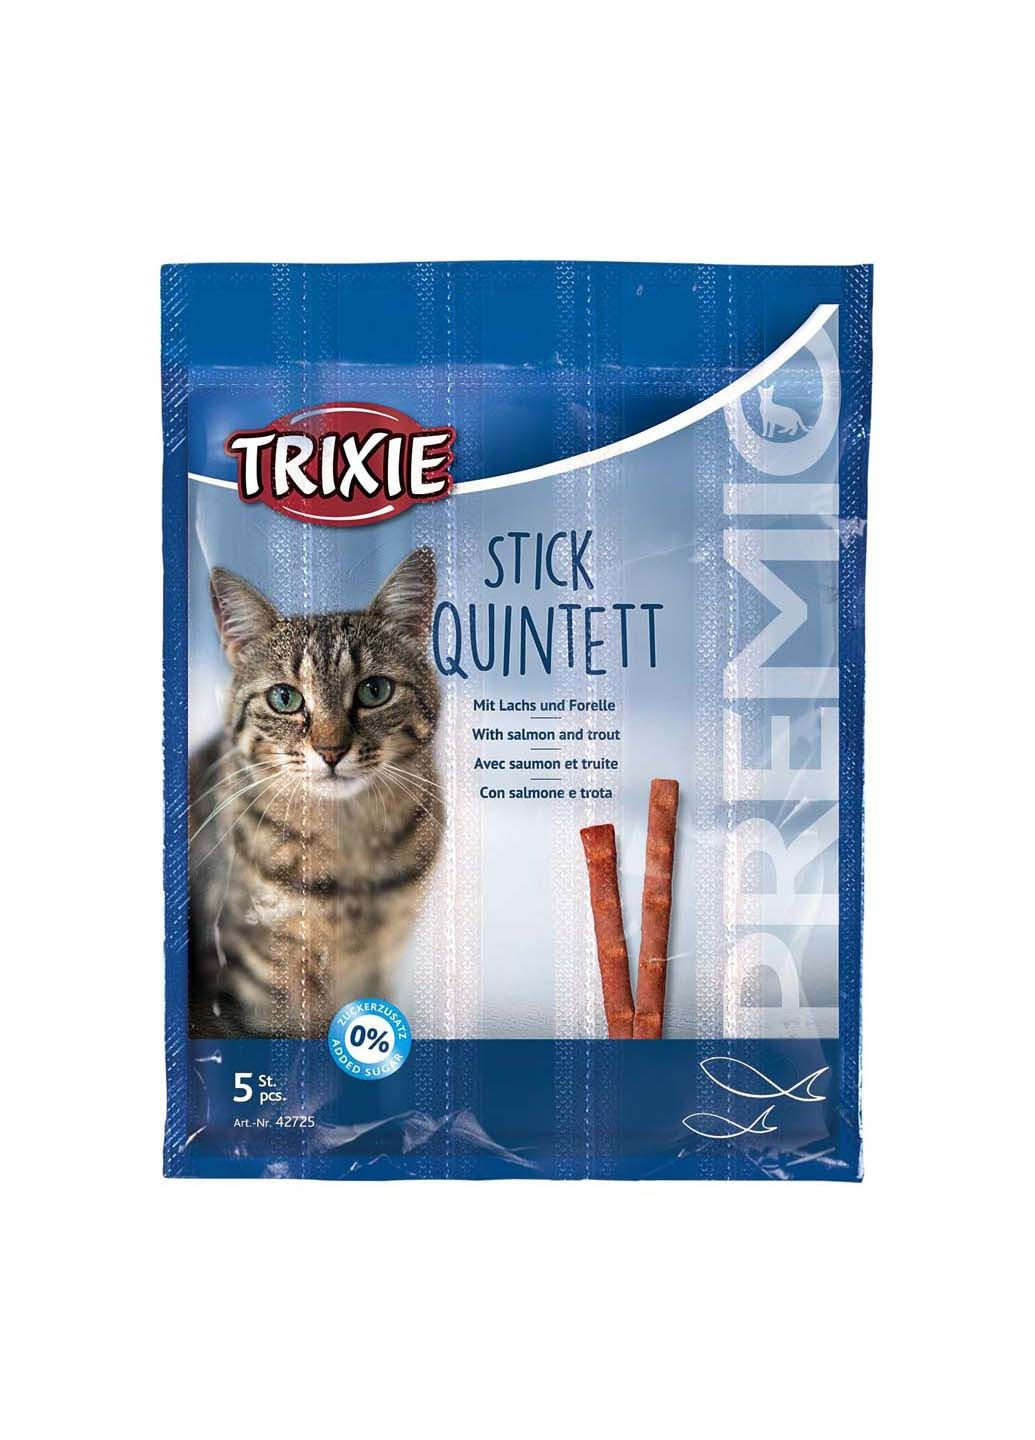 Лакомство для кошек 42725 Premio Quadro-Sticks лосось/форель 5 шт x 5 г Trixie (285778914)